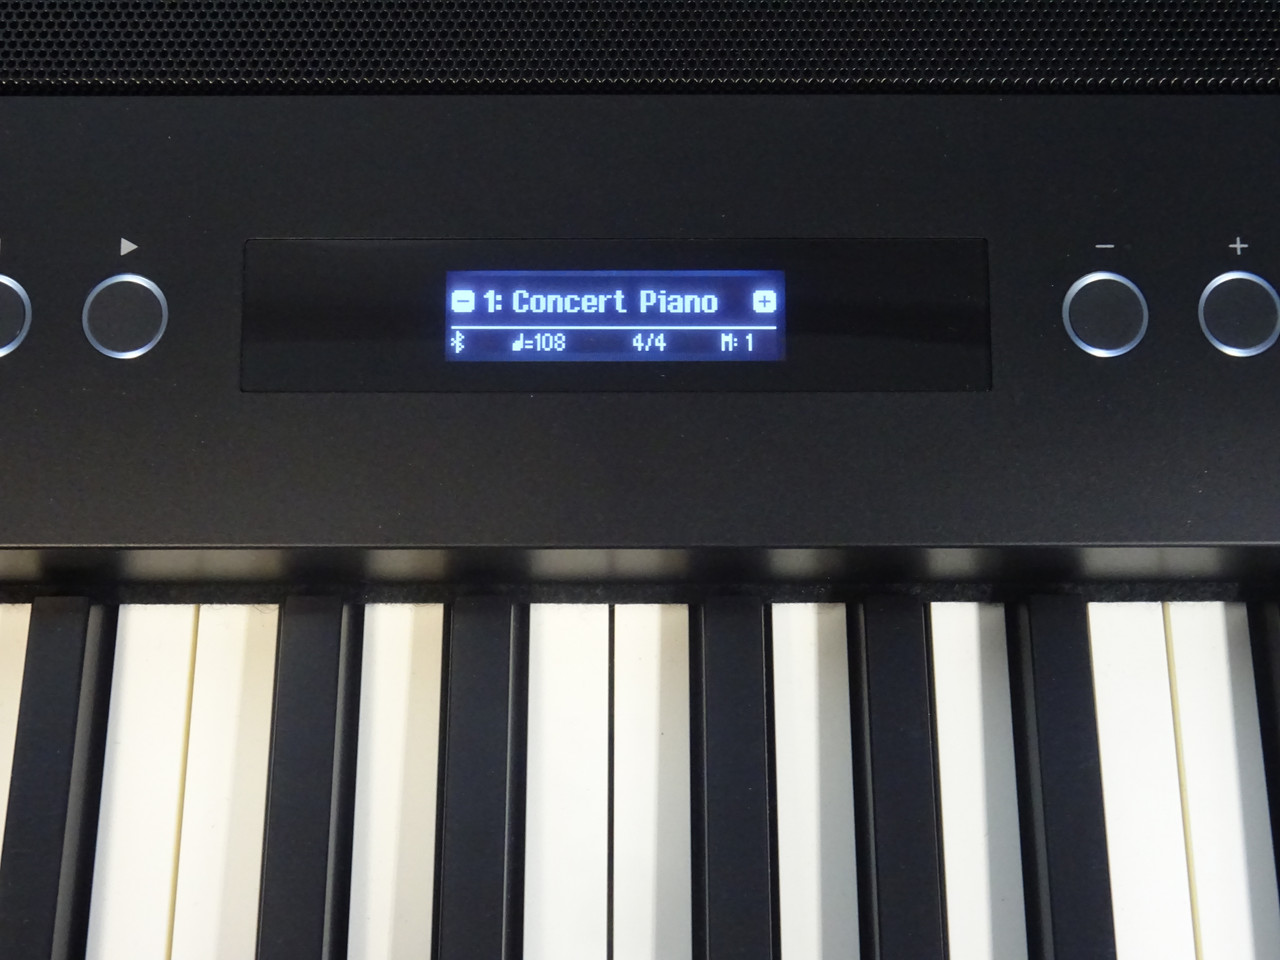 Roland FP-60X Digital Piano